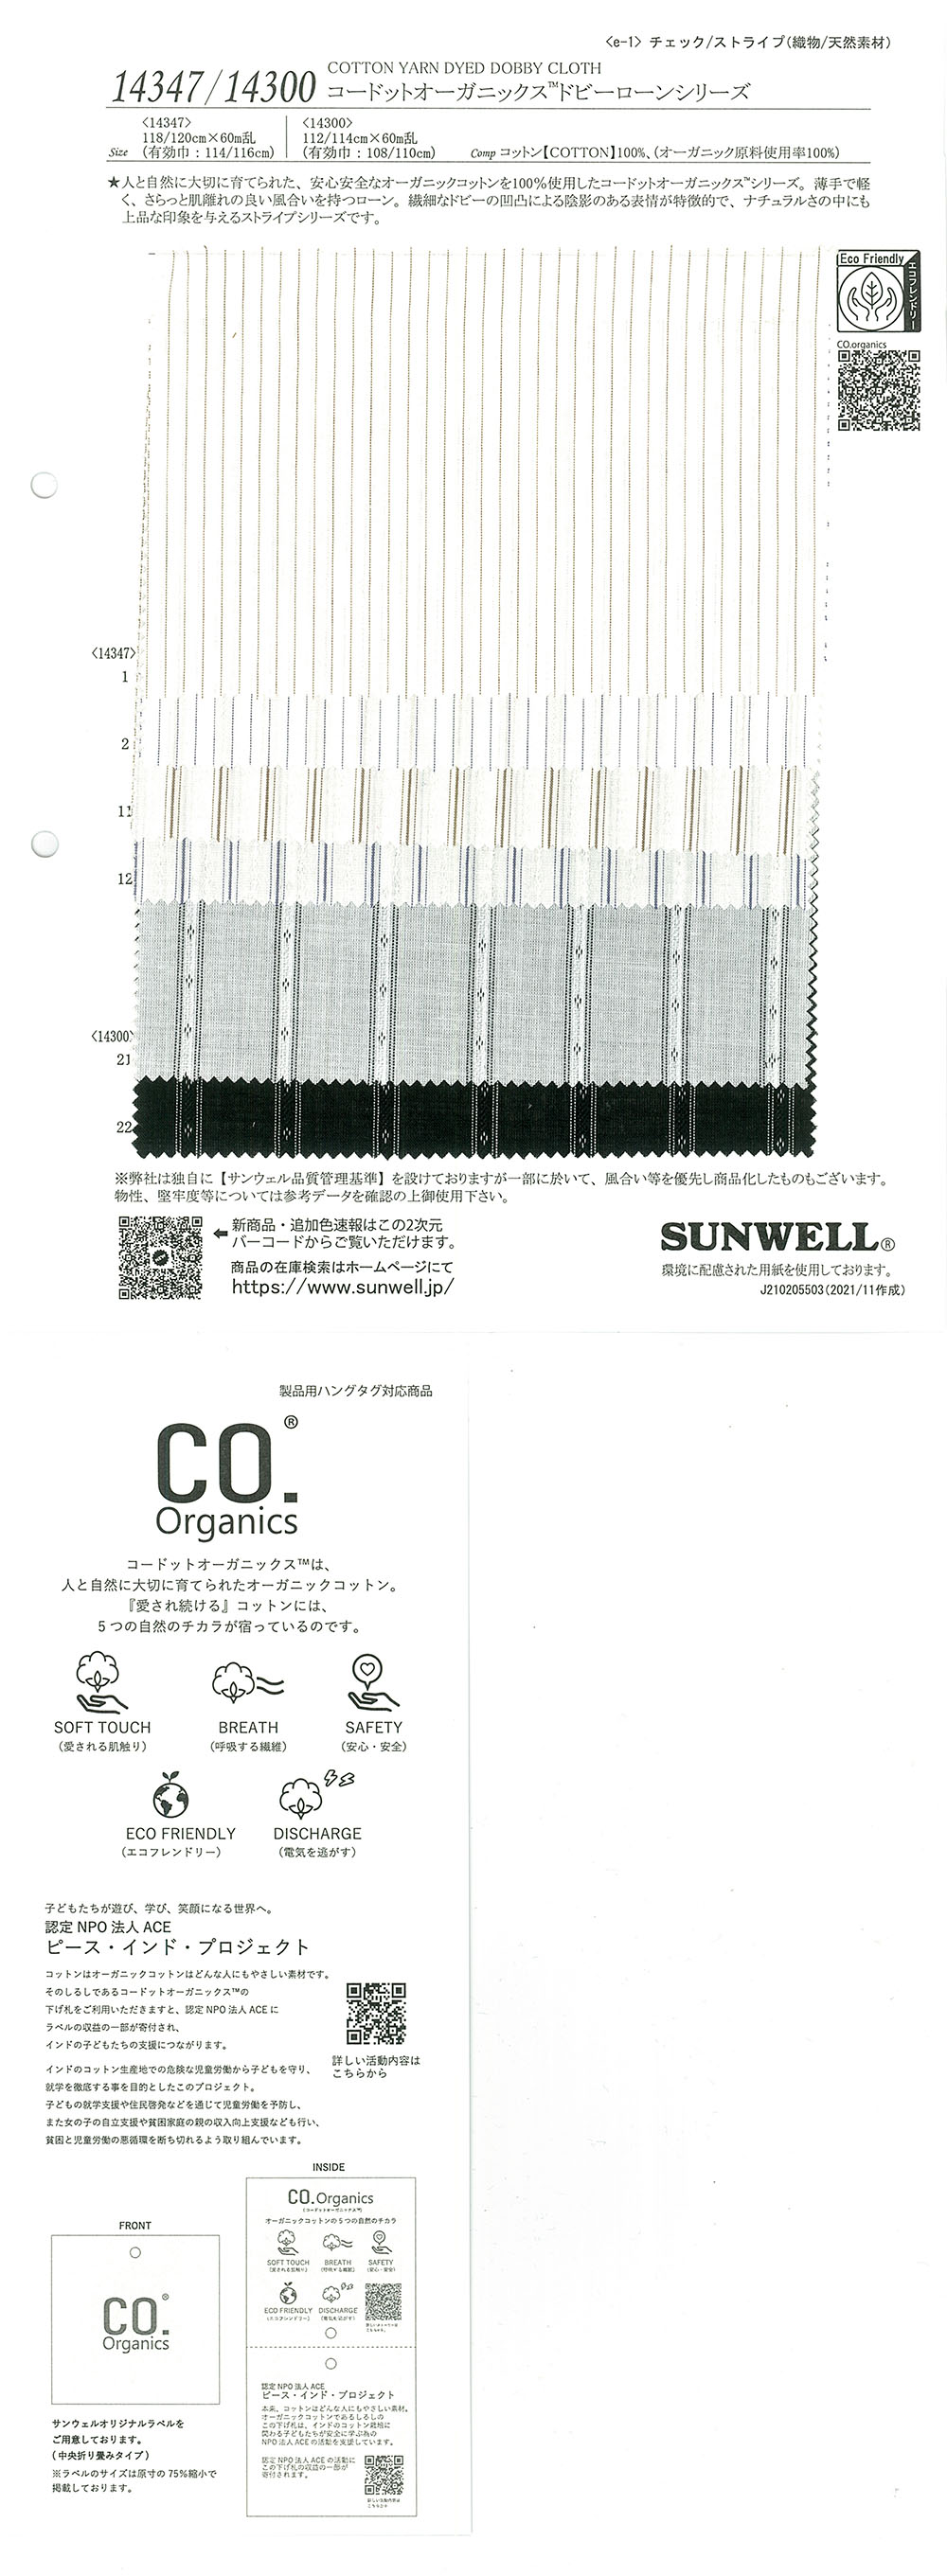 14347 Serie De Césped Dobby De Cordot Organics (R)[Fabrica Textil] SUNWELL